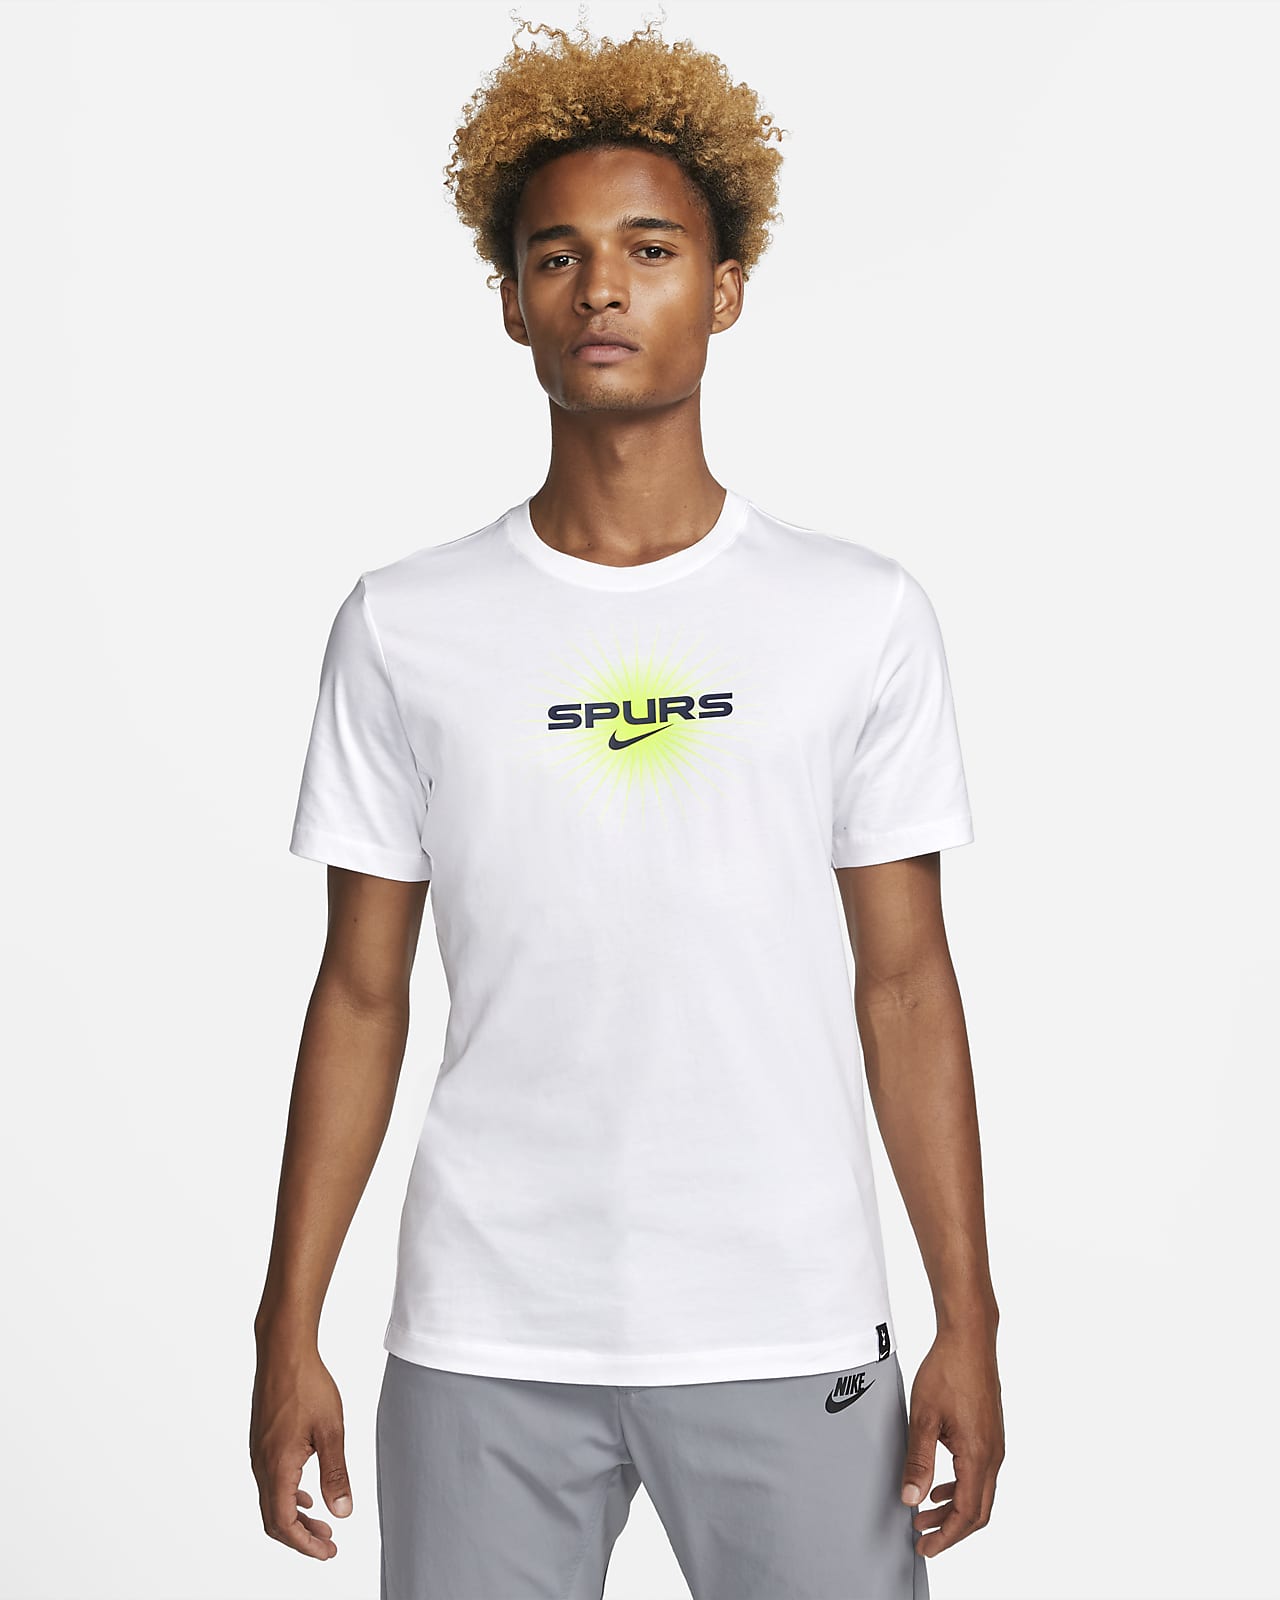 Tottenham Hotspur Voice Men's Soccer T-Shirt